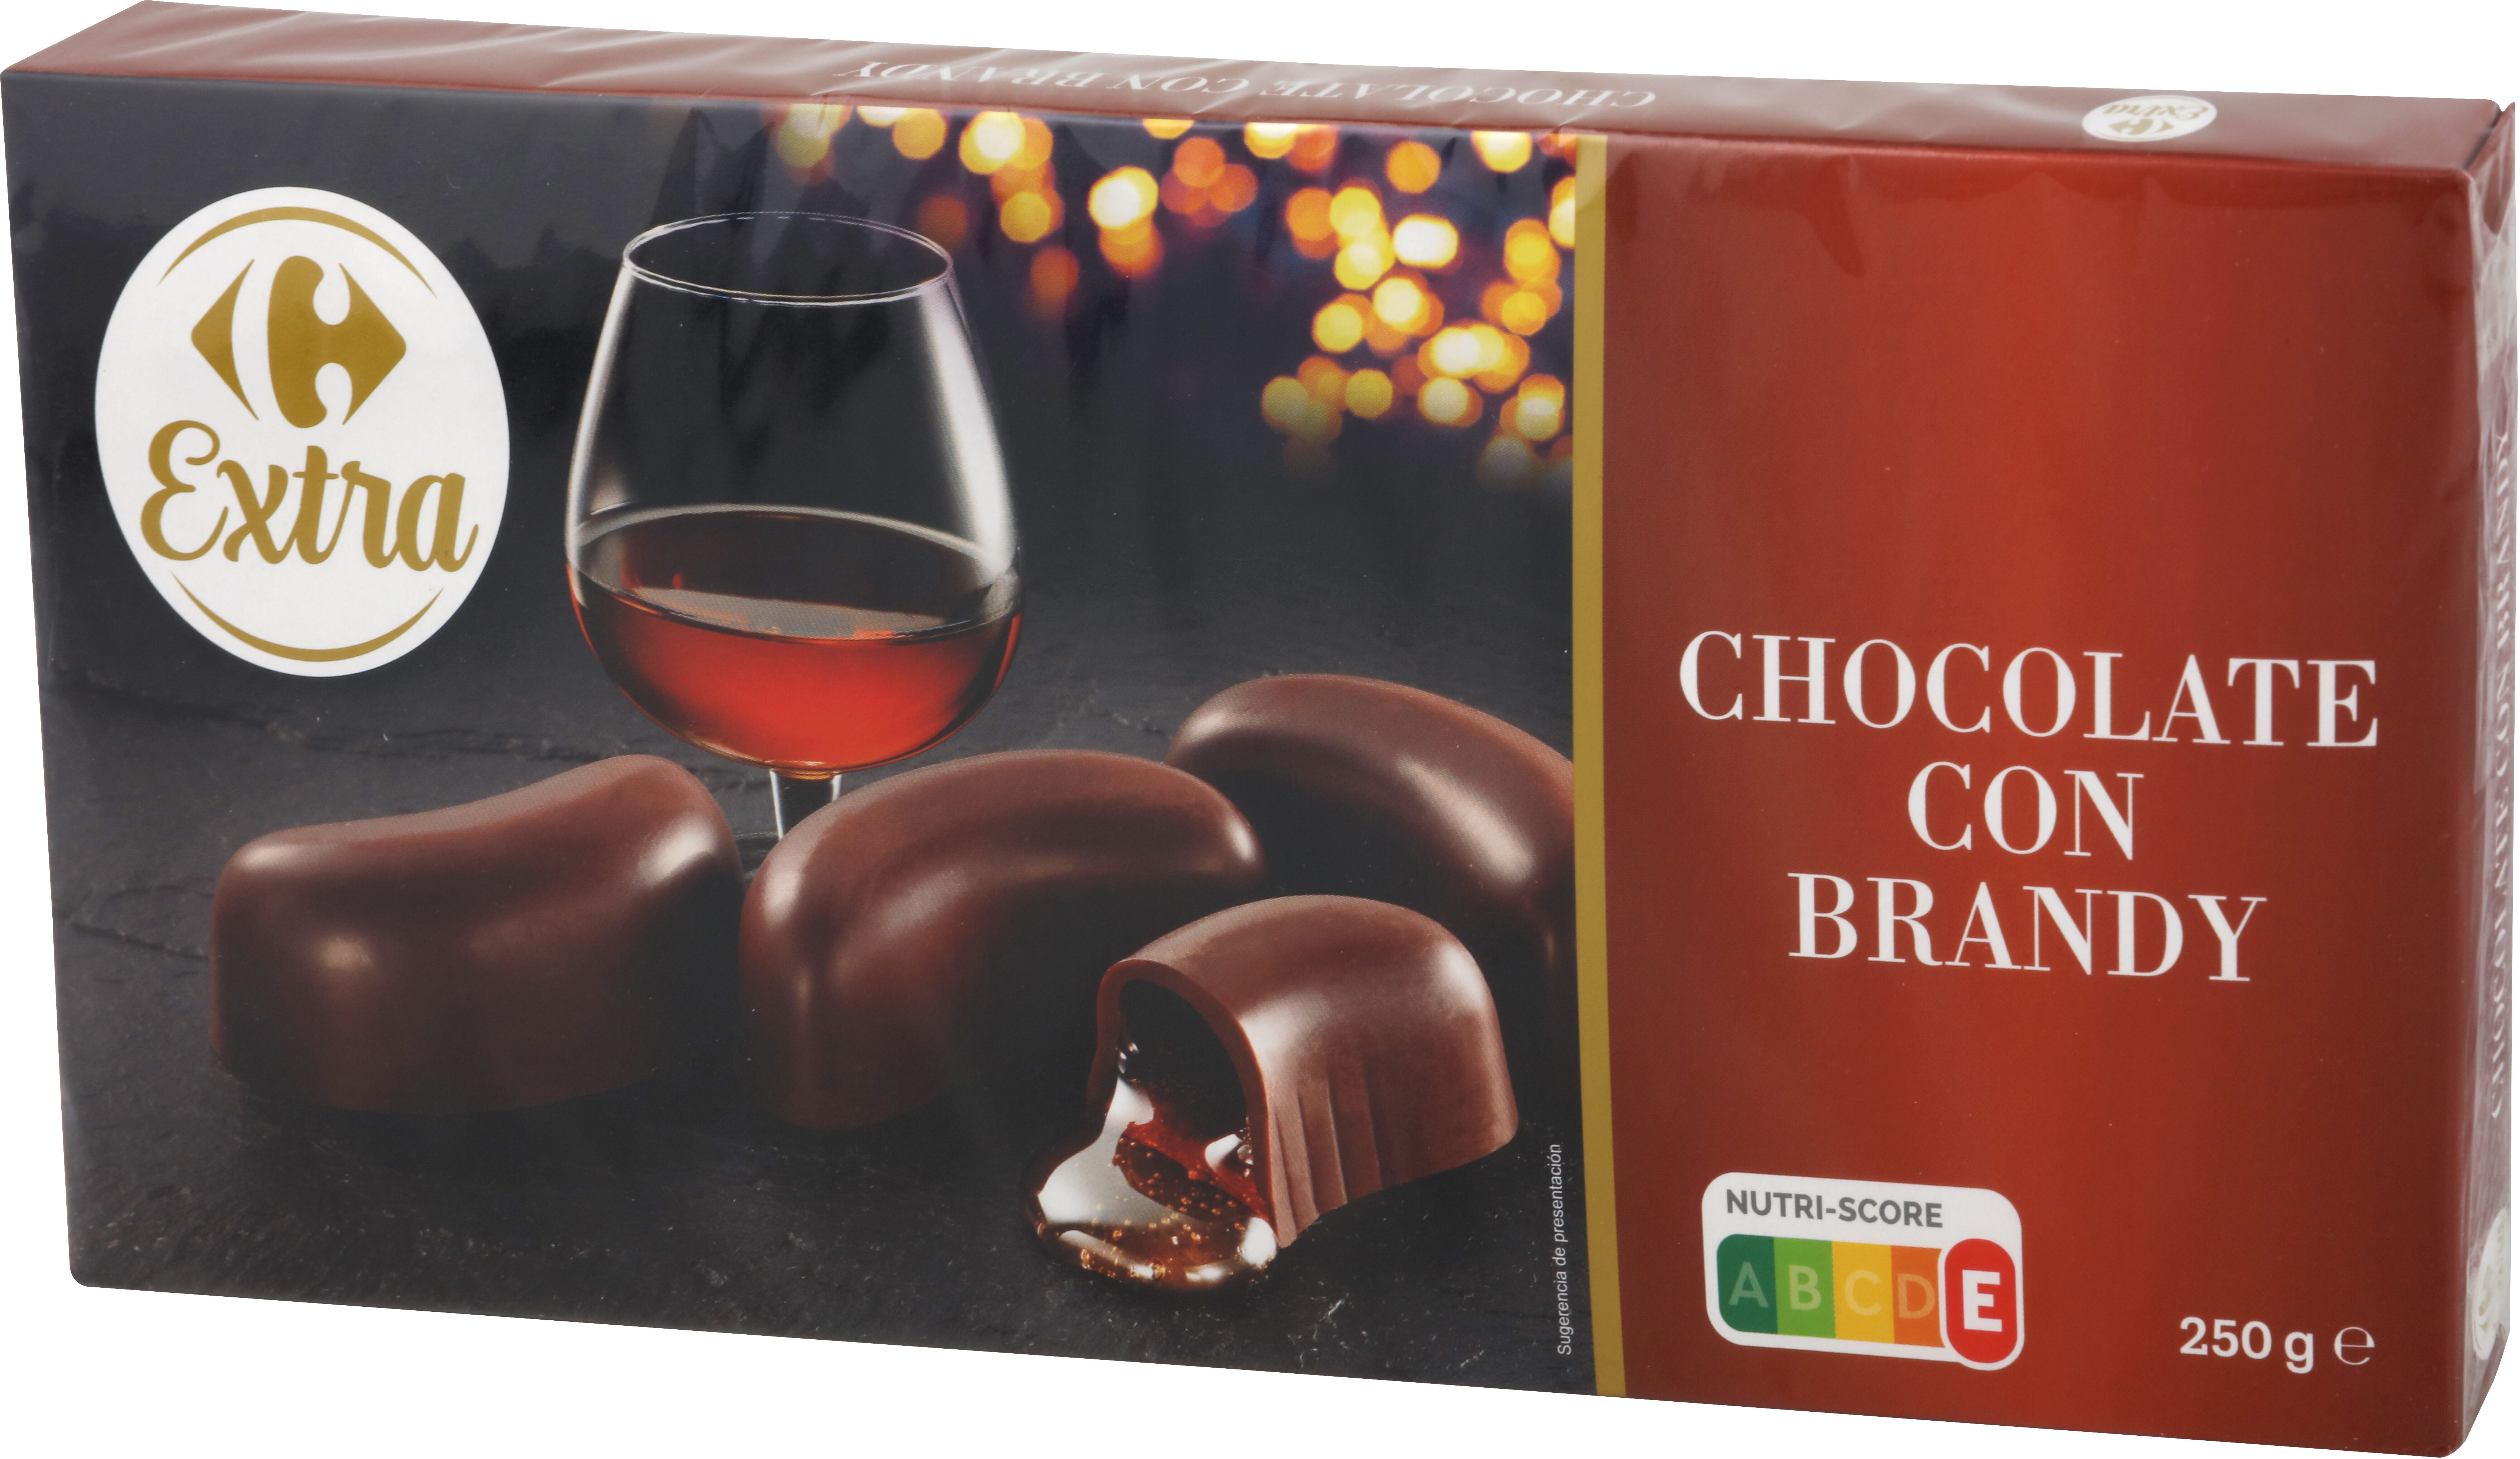 Chocolate con brandy - Producto